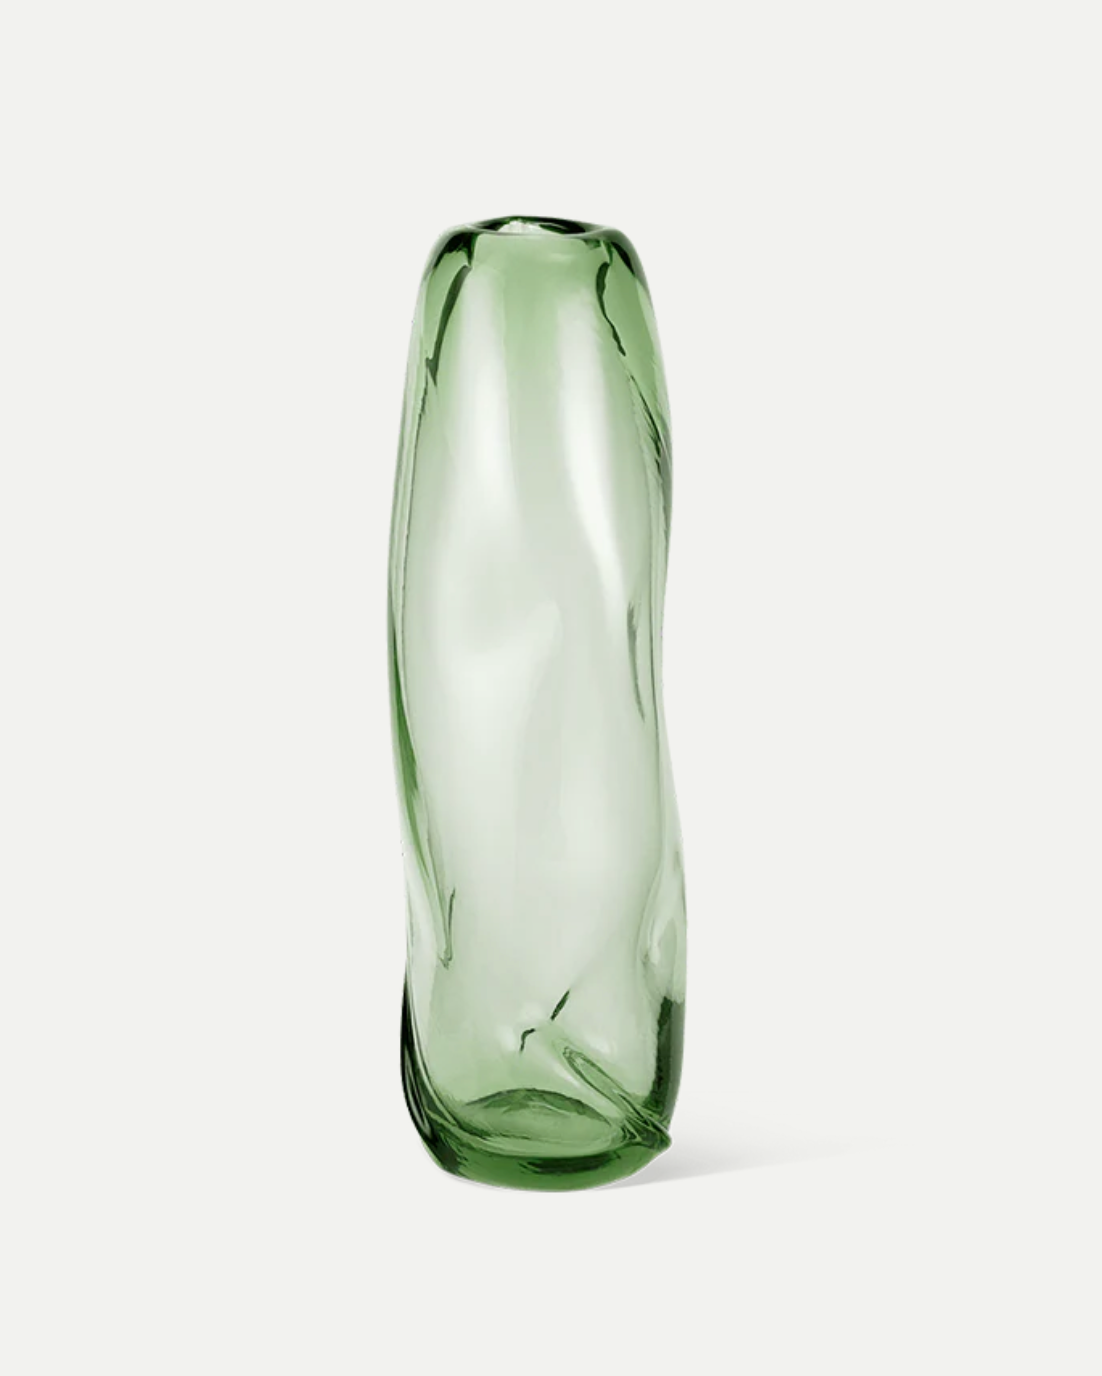 Water swirl vase